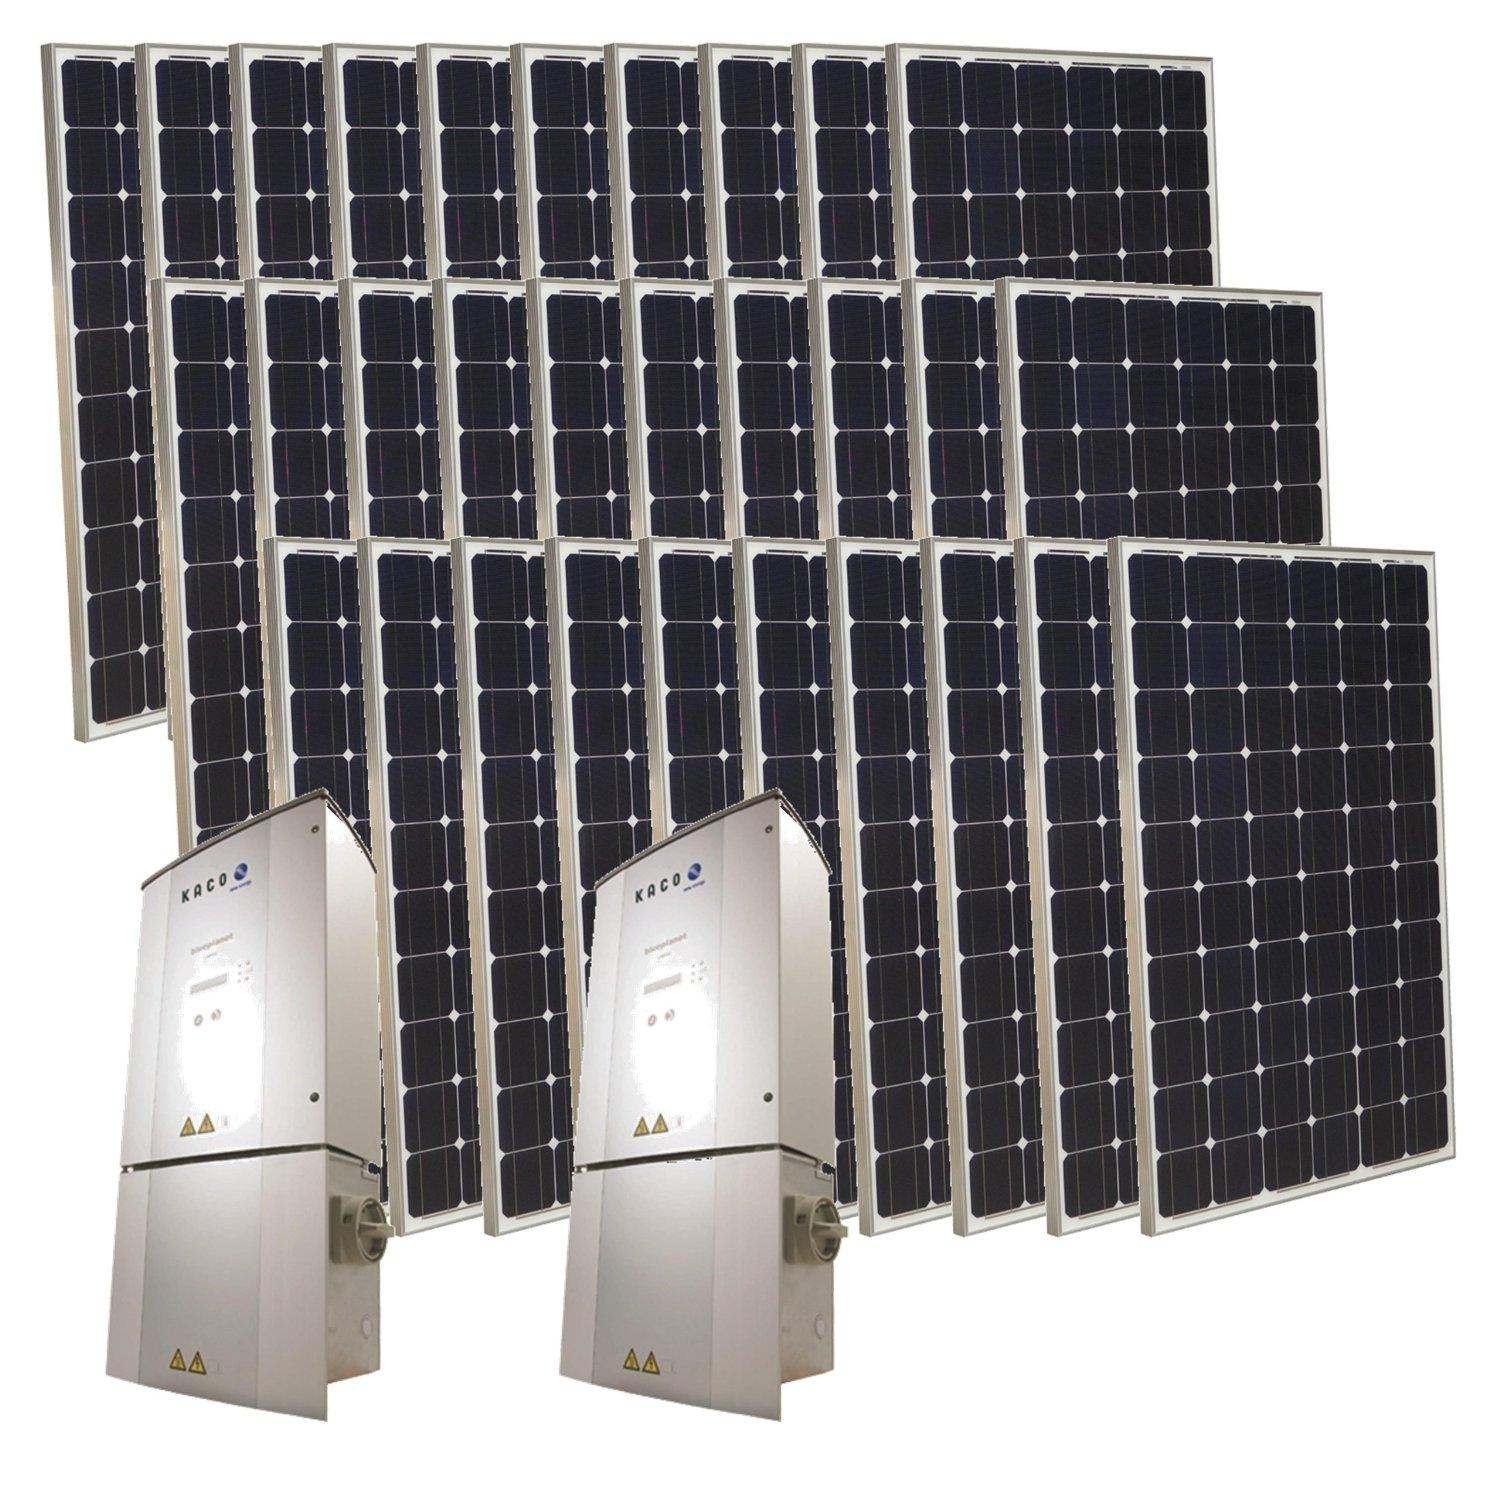 Try Home solar panel kits diy ~ George Mayda